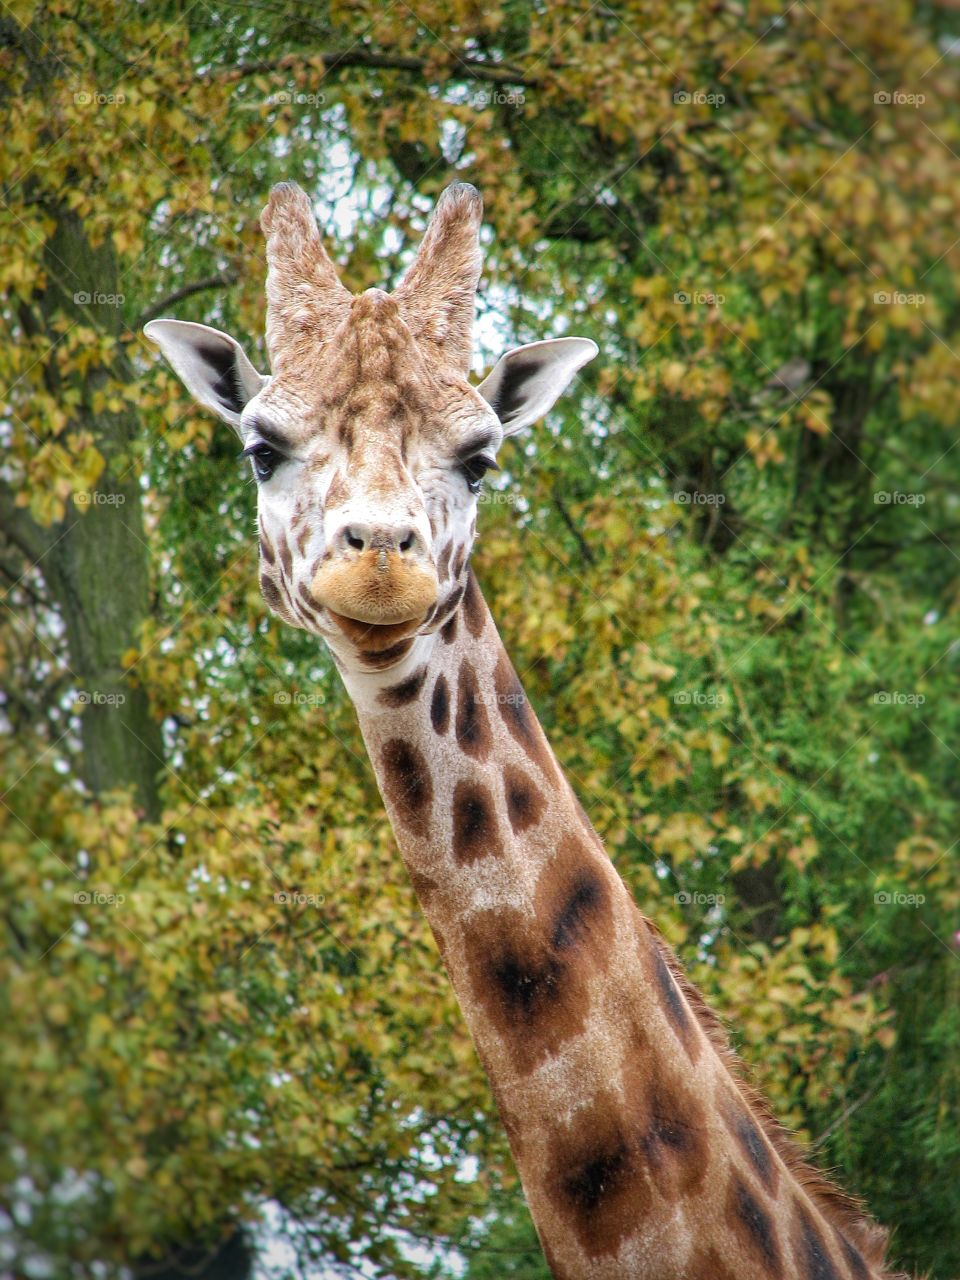 Curious Giraffe. The long neck and head of a very tall giraffe.